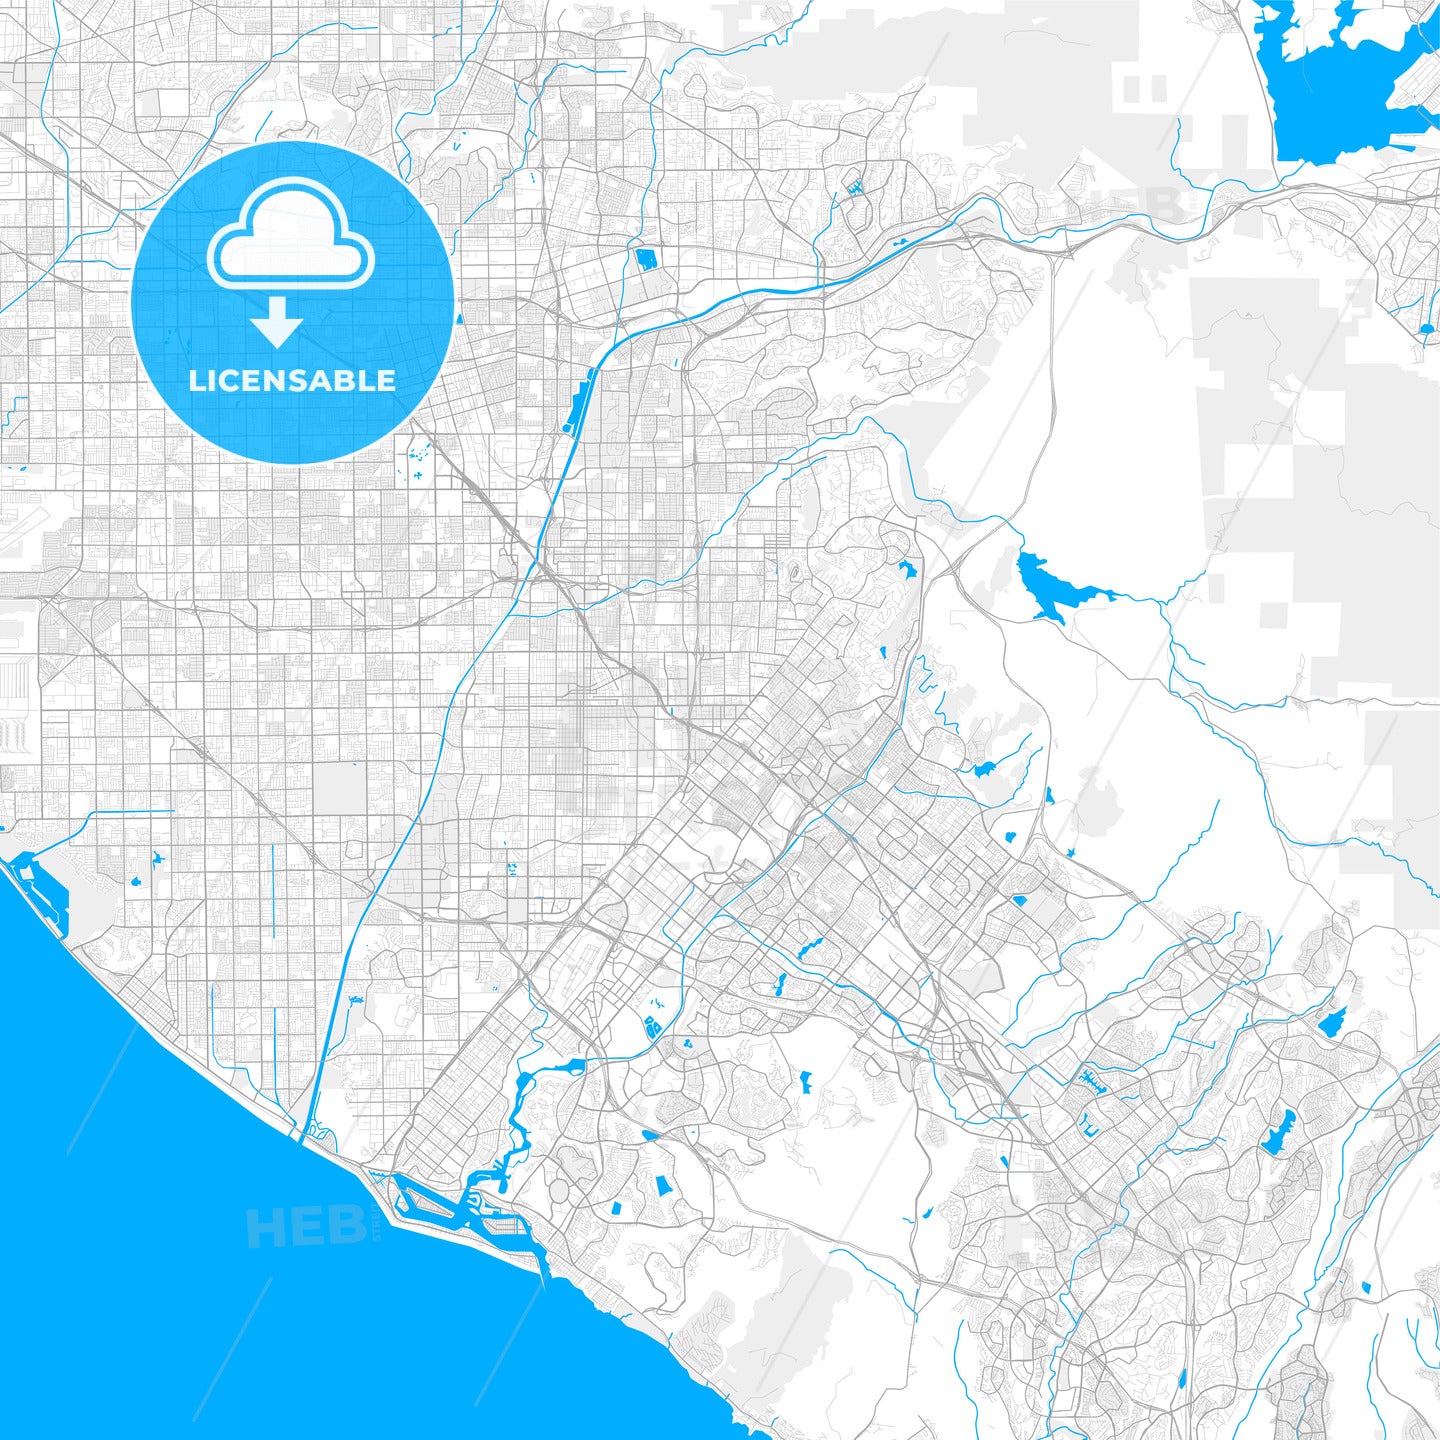 Rich detailed vector map of Tustin, California, USA